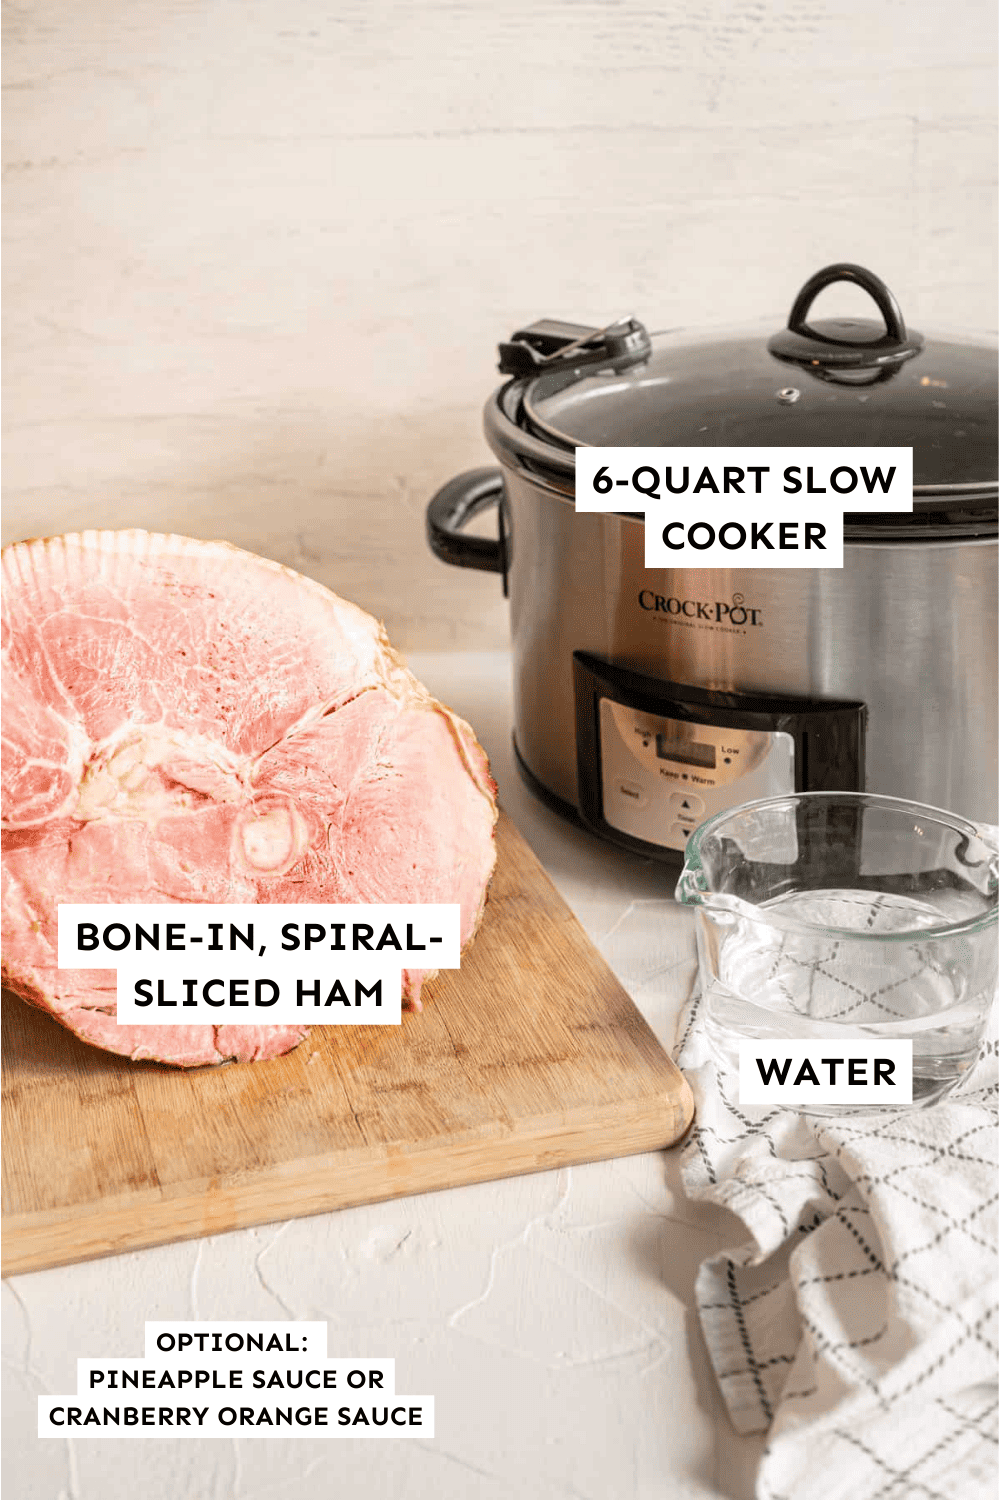 Ingredients for making a crockpot ham.